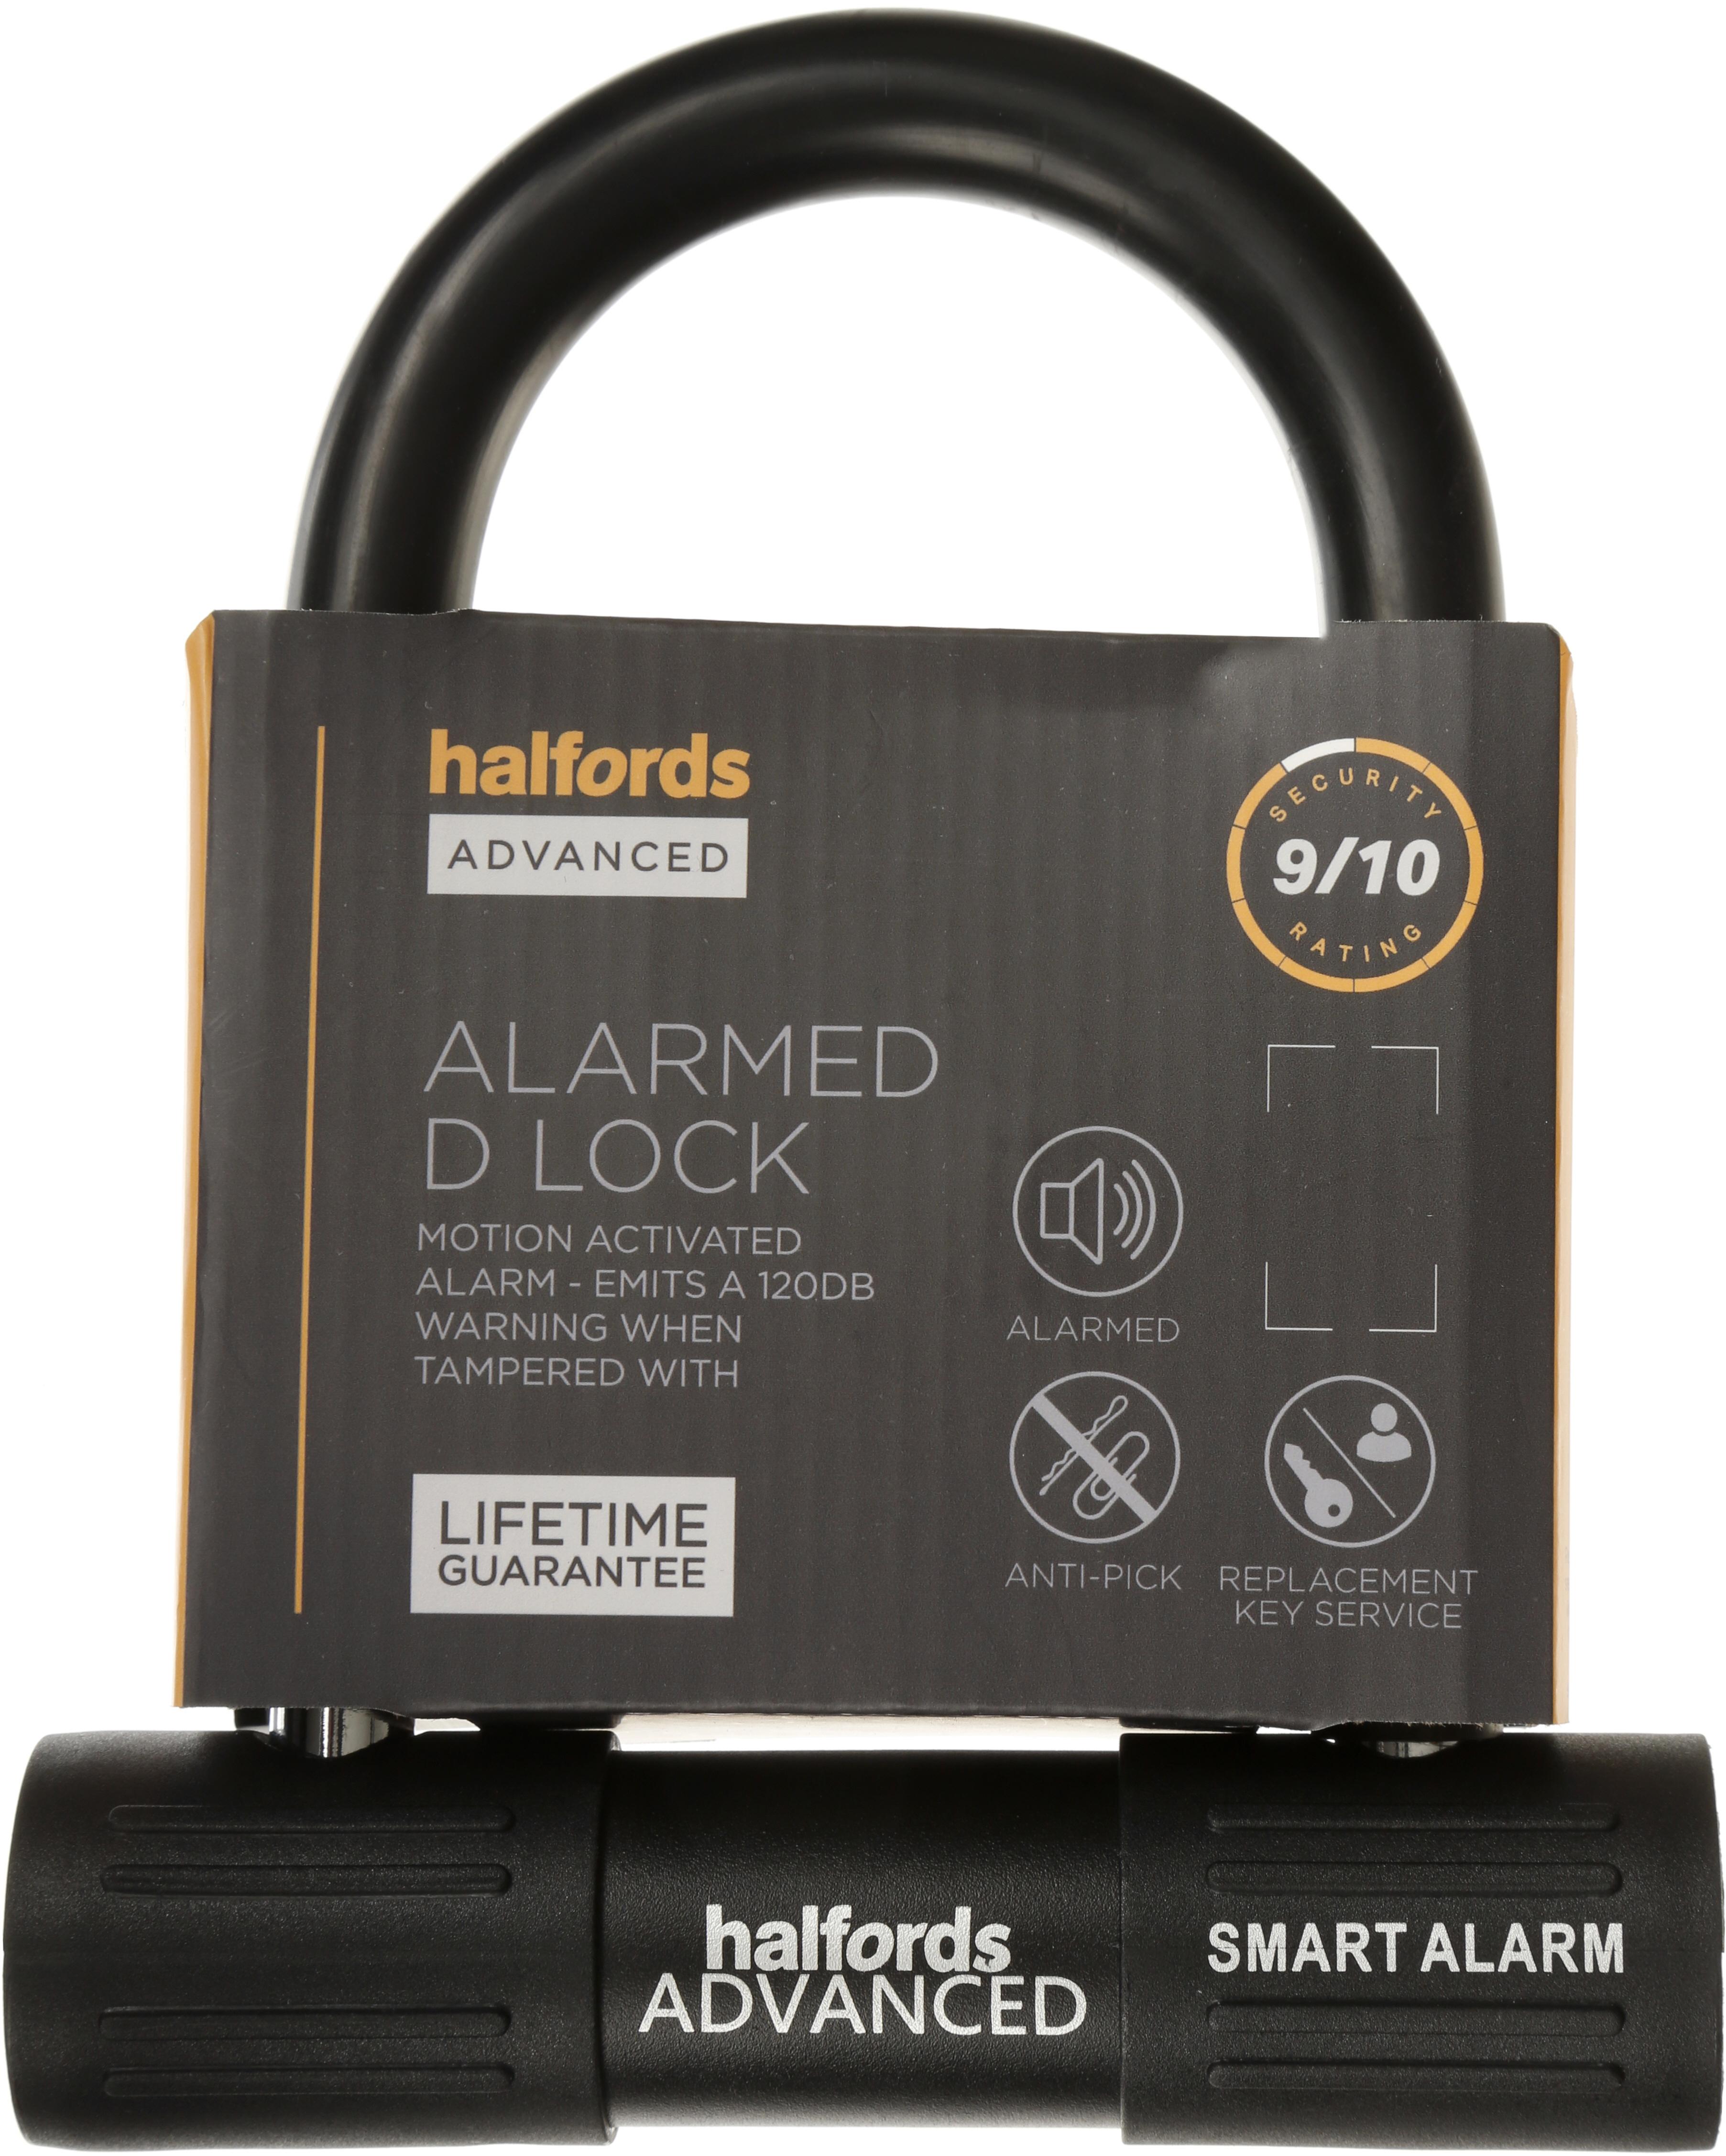 halfords disc lock